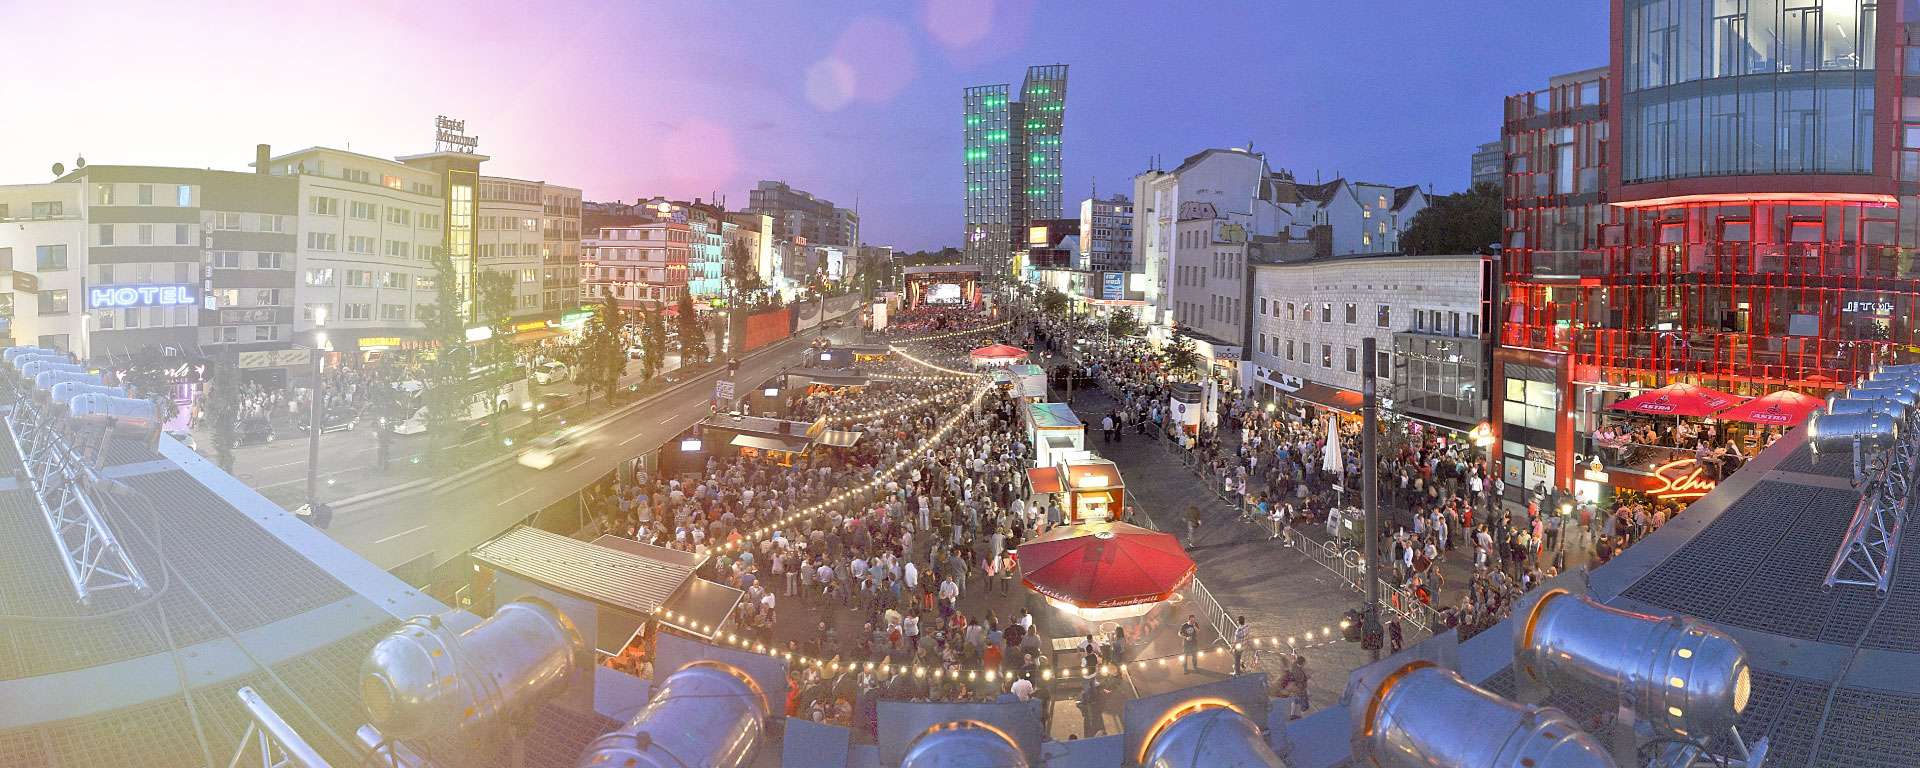 St. Pauli Nachtmarkt